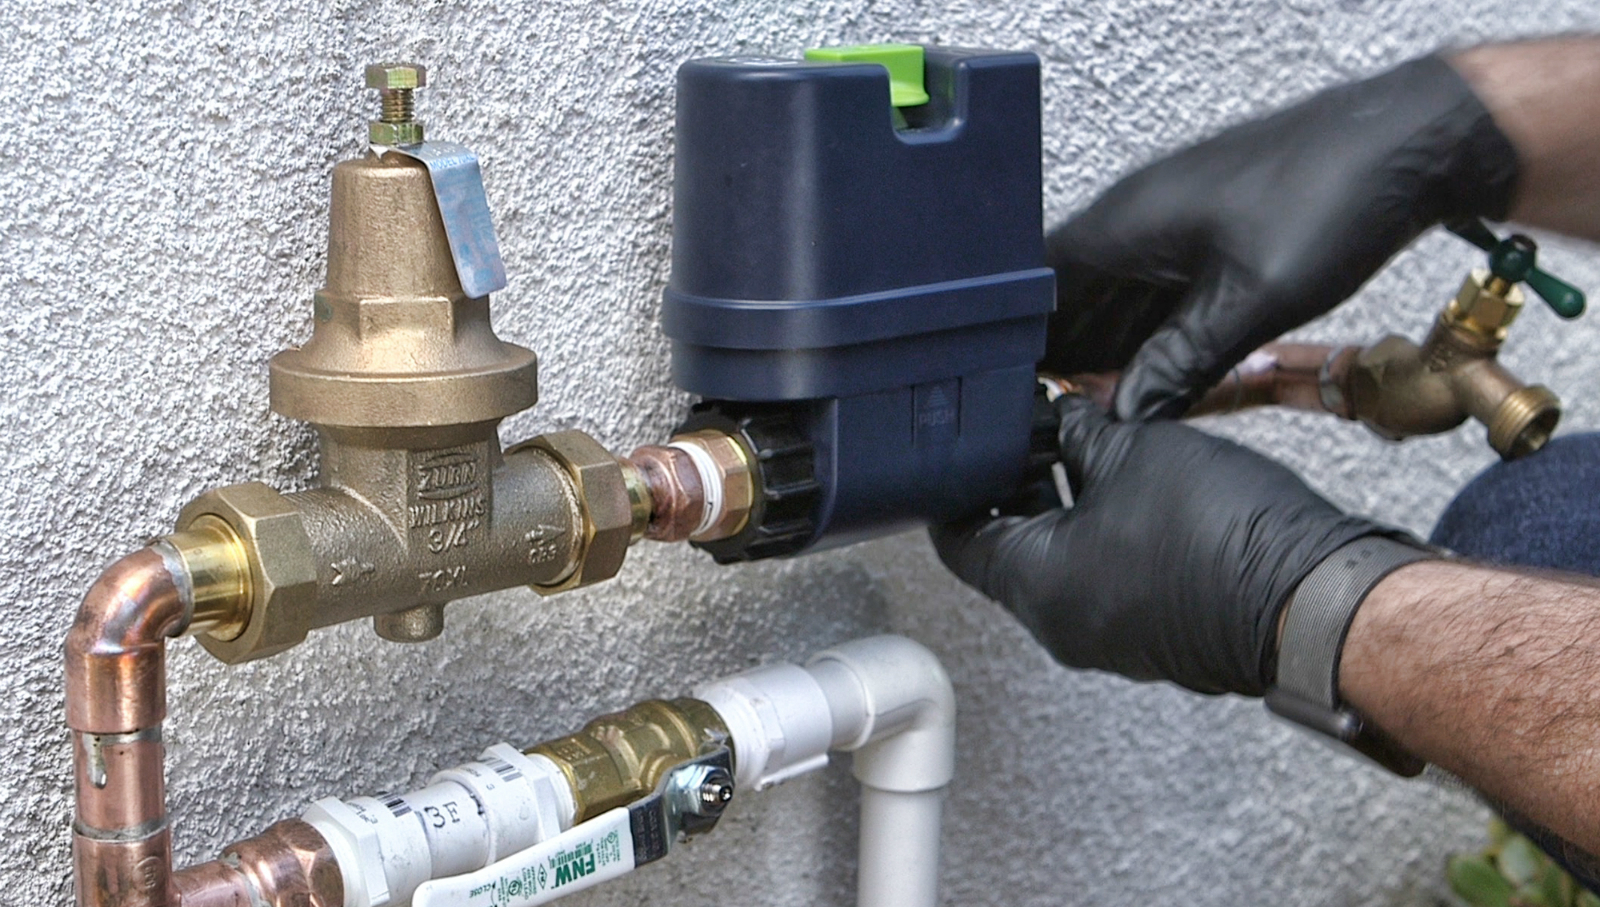 Flo Smart Home Water Leak Alert System Adds Damage Reimbursement 